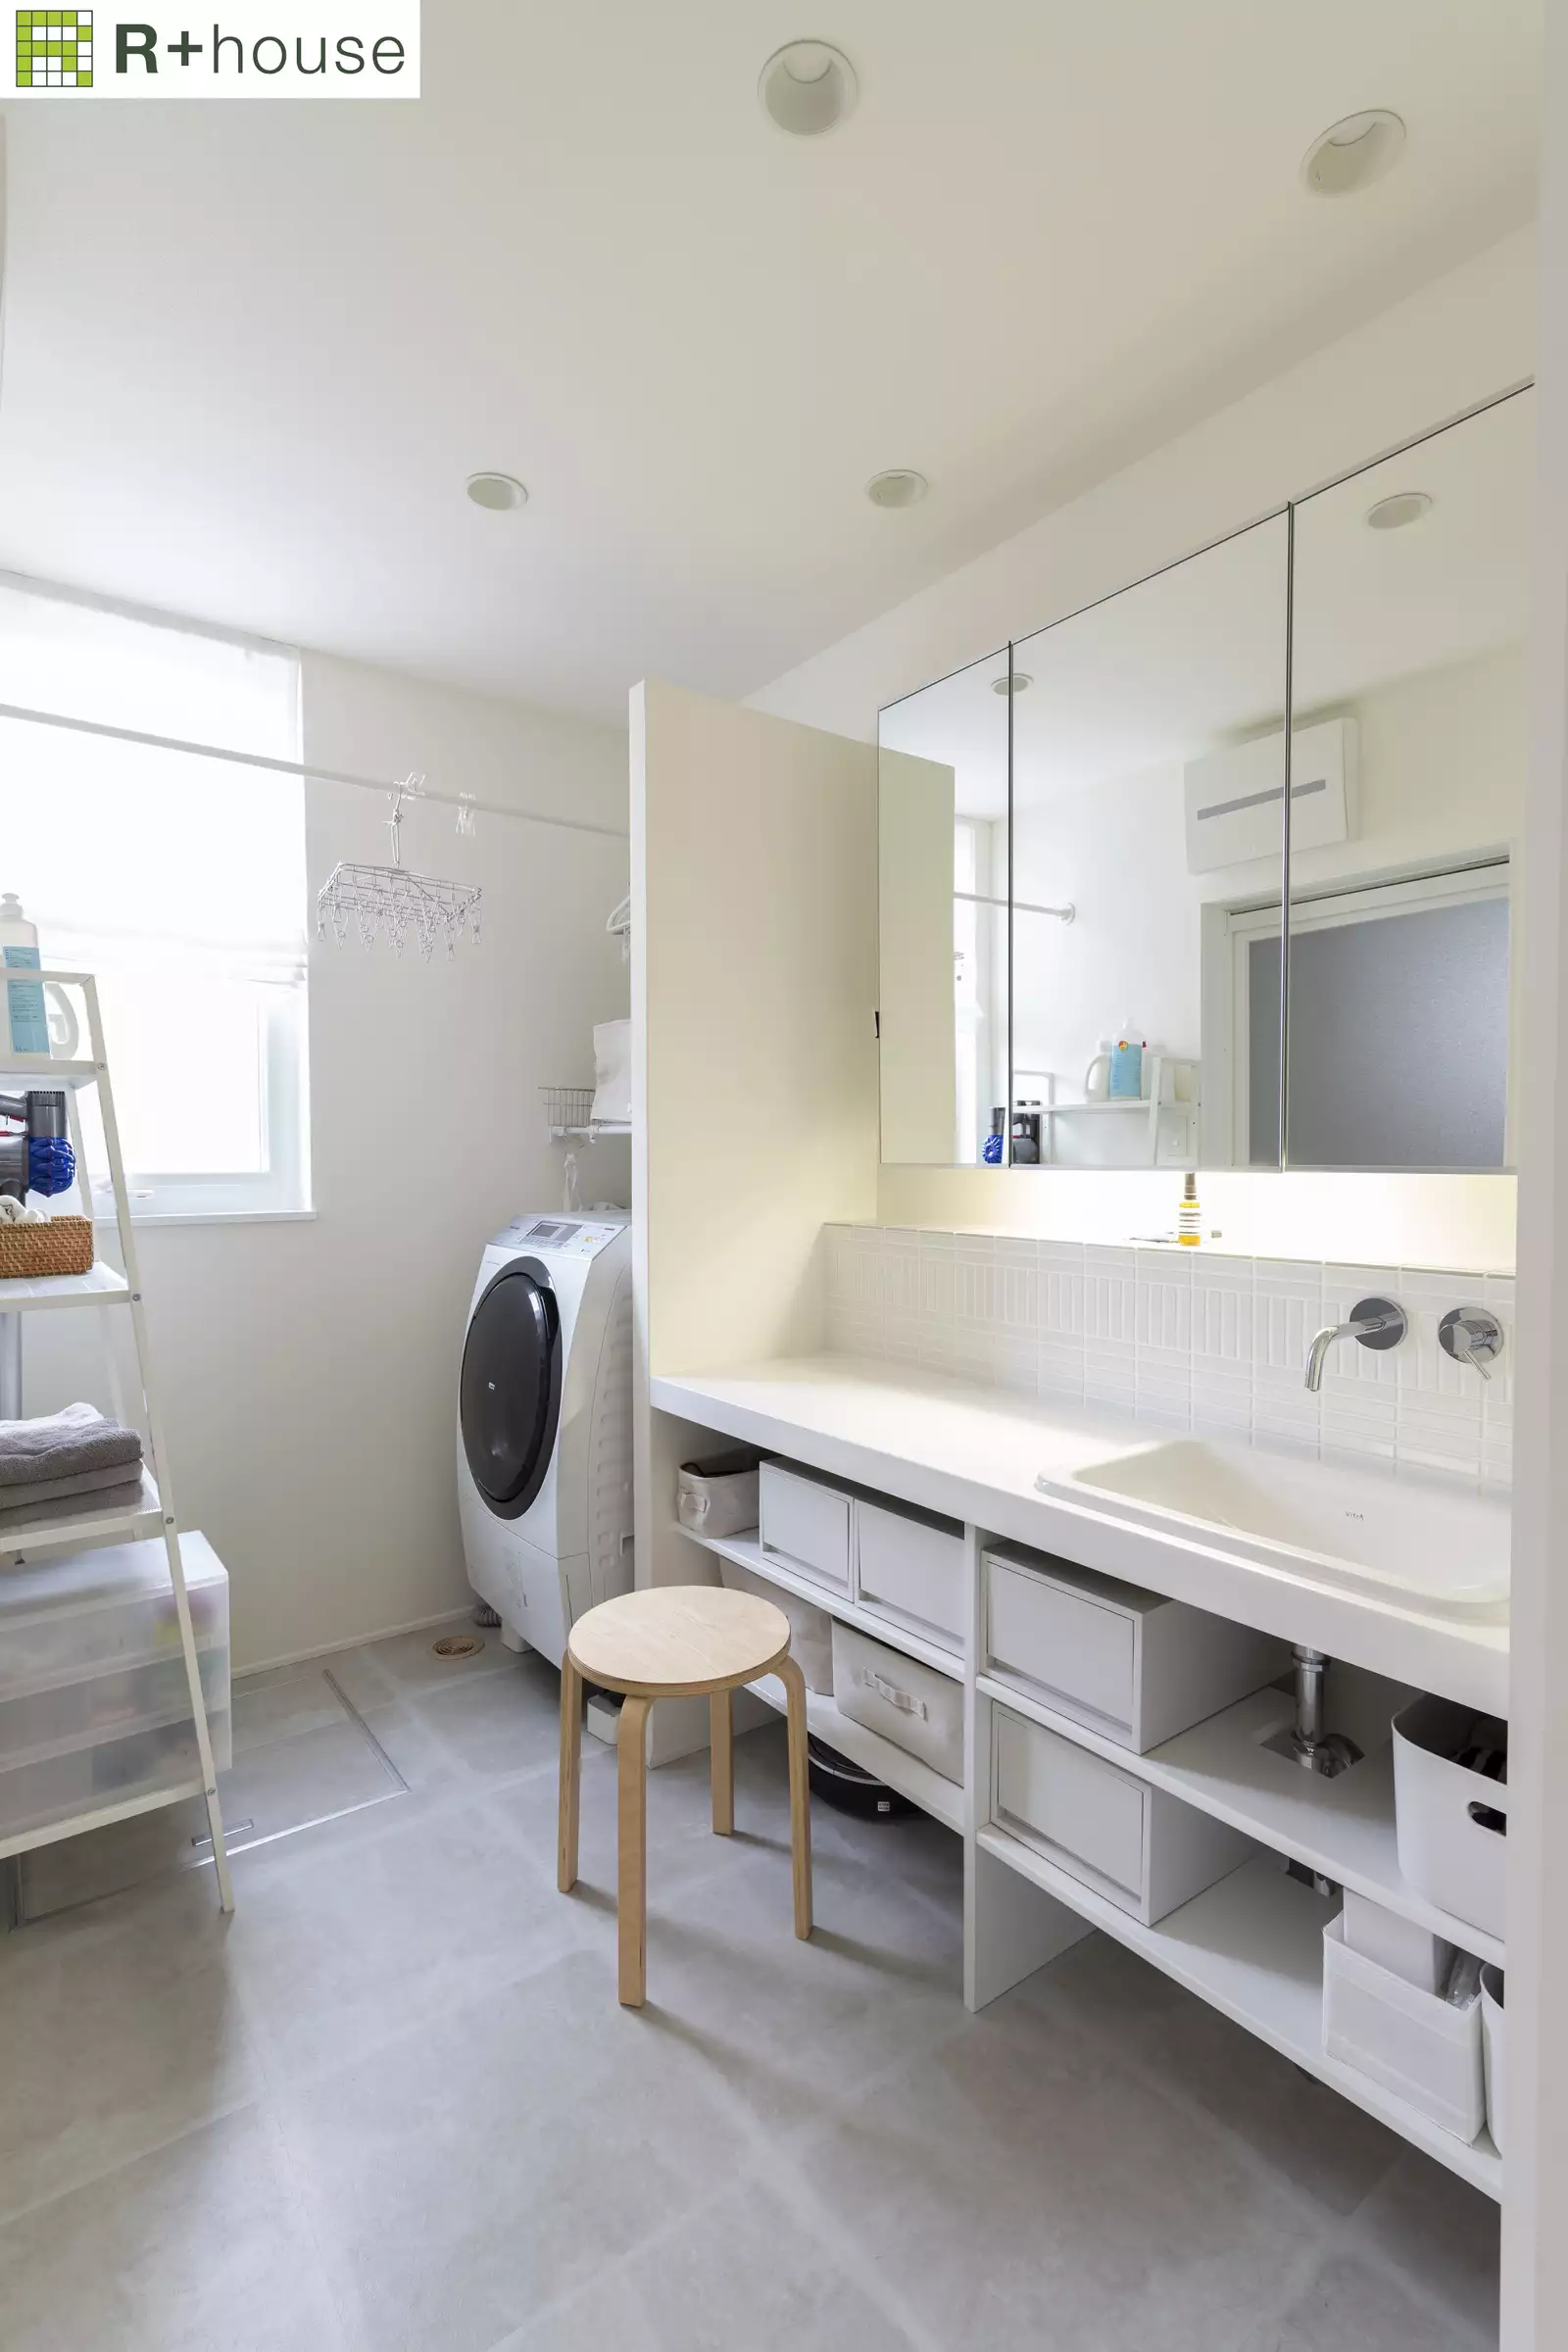 R+houseの物件の洗面所の写真です。グレーのタイルに白い洗面台と白のドラム式洗濯機があります。